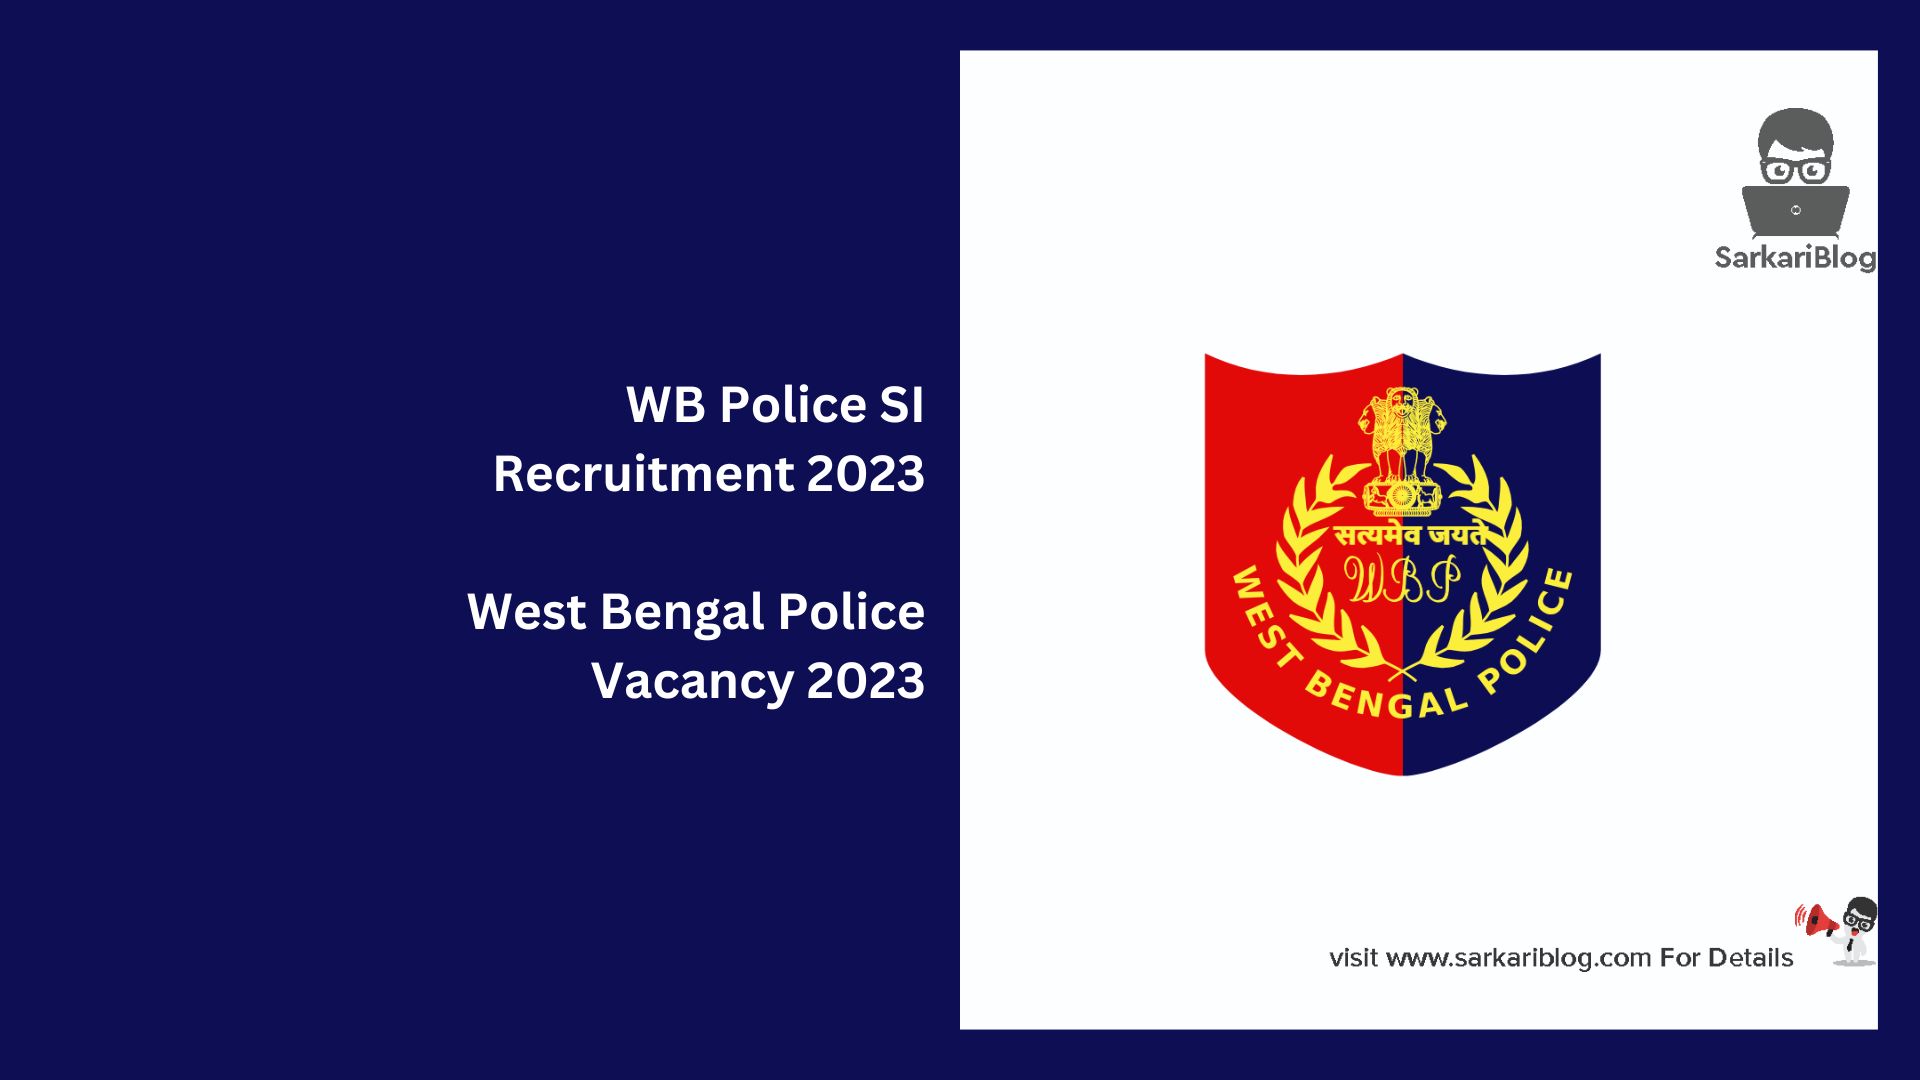 WB Police SI Recruitment 2023